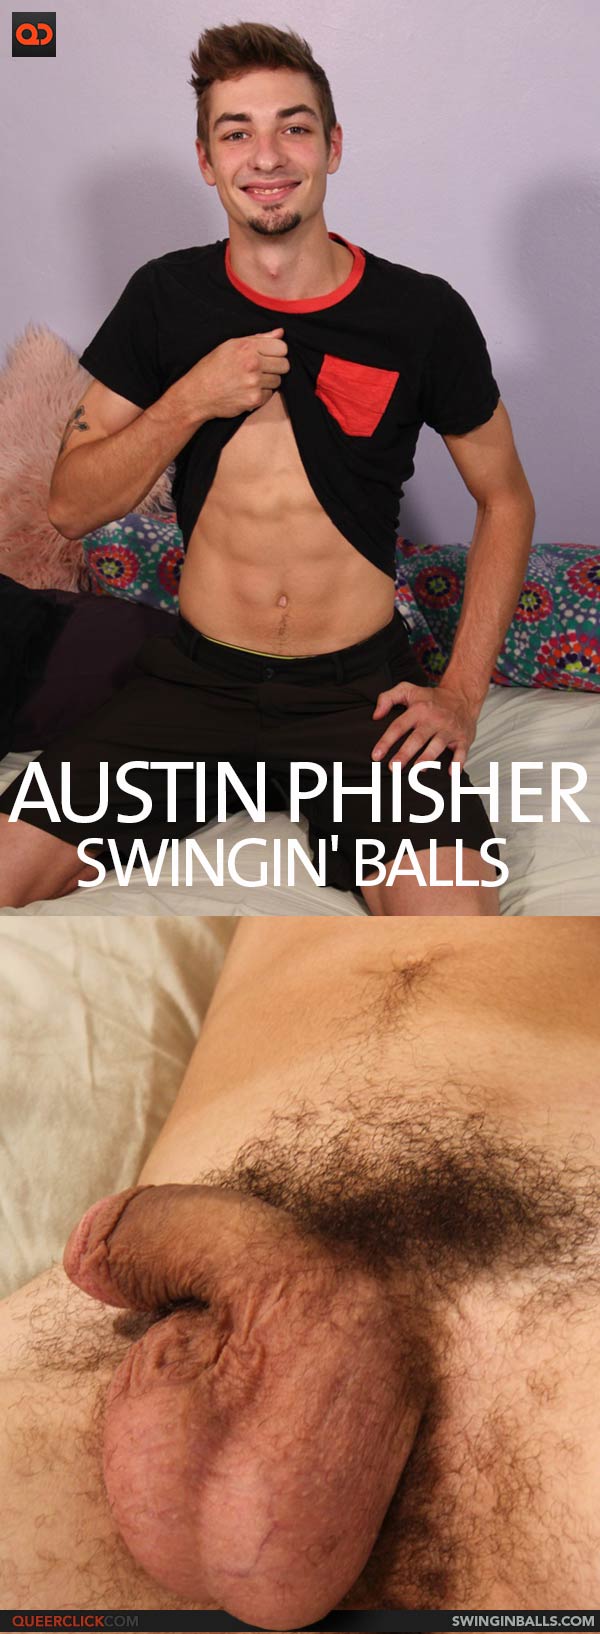 Swingin' Balls: Austin Phisher